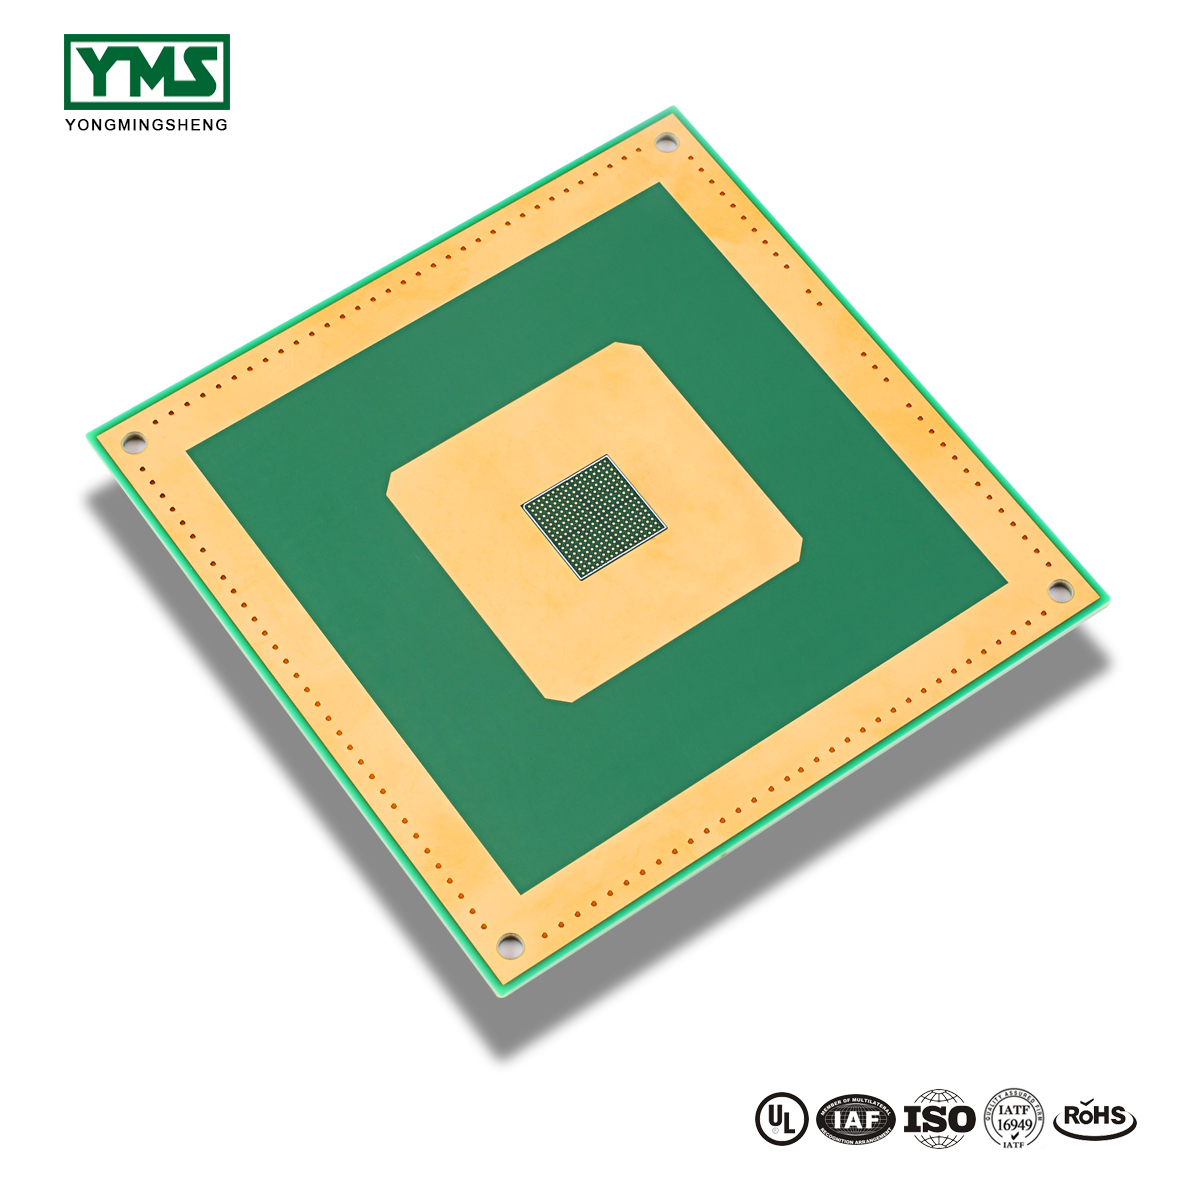 Low price for Ultra-Thin Pcb - 10 Layer (4OZ) High Tg Hard Gold (BGA) Board | YMS PCB – Yongmingsheng